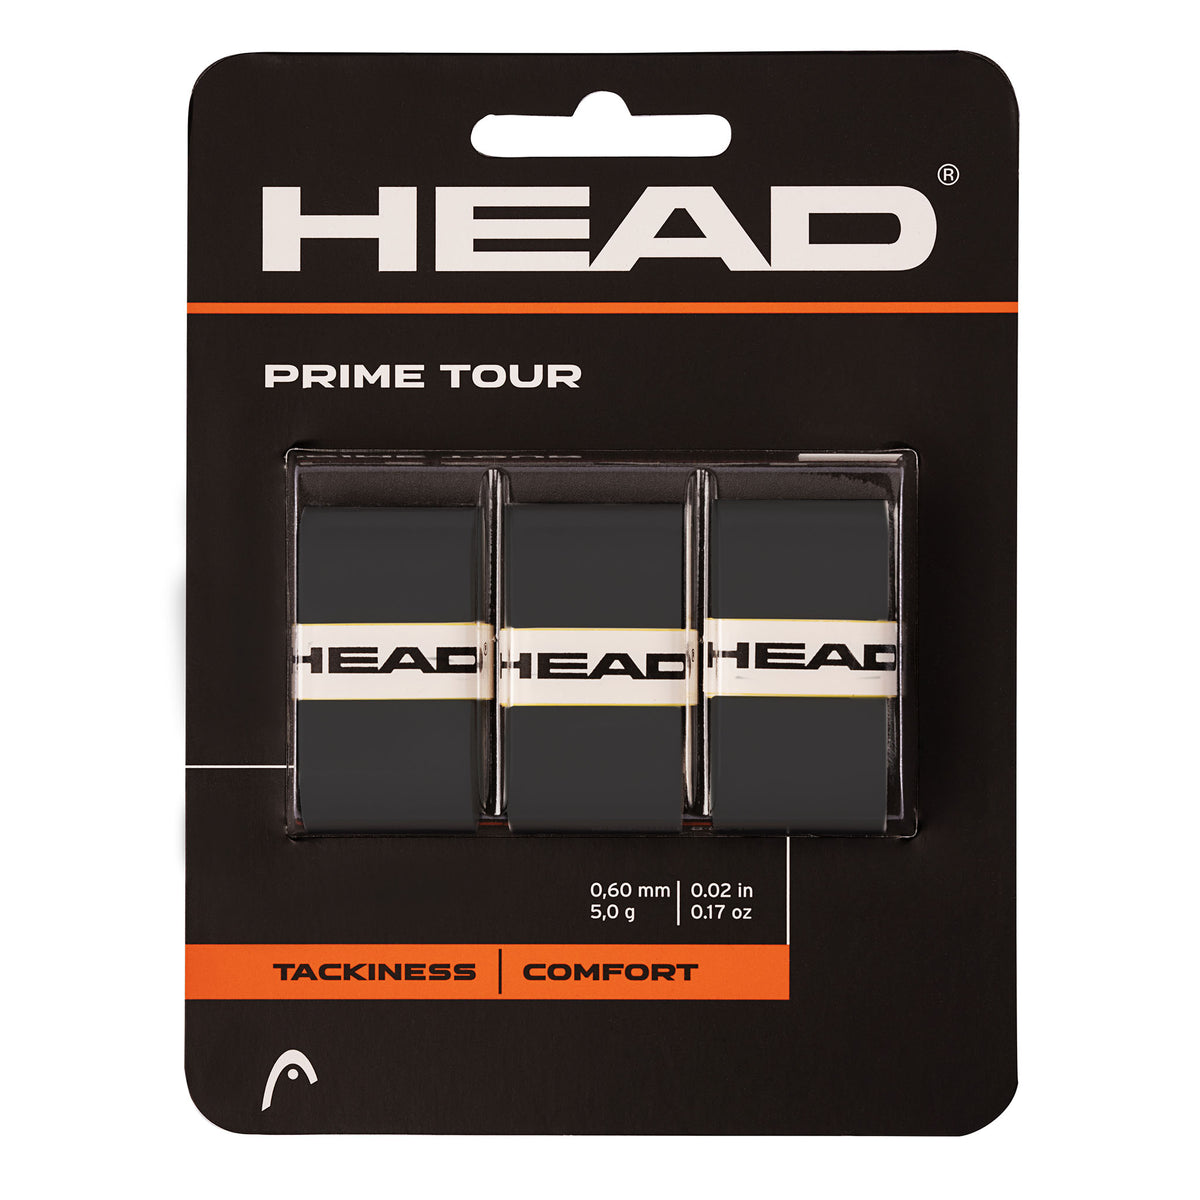 Head Prime Tour Overgrip Pack of 3: Black